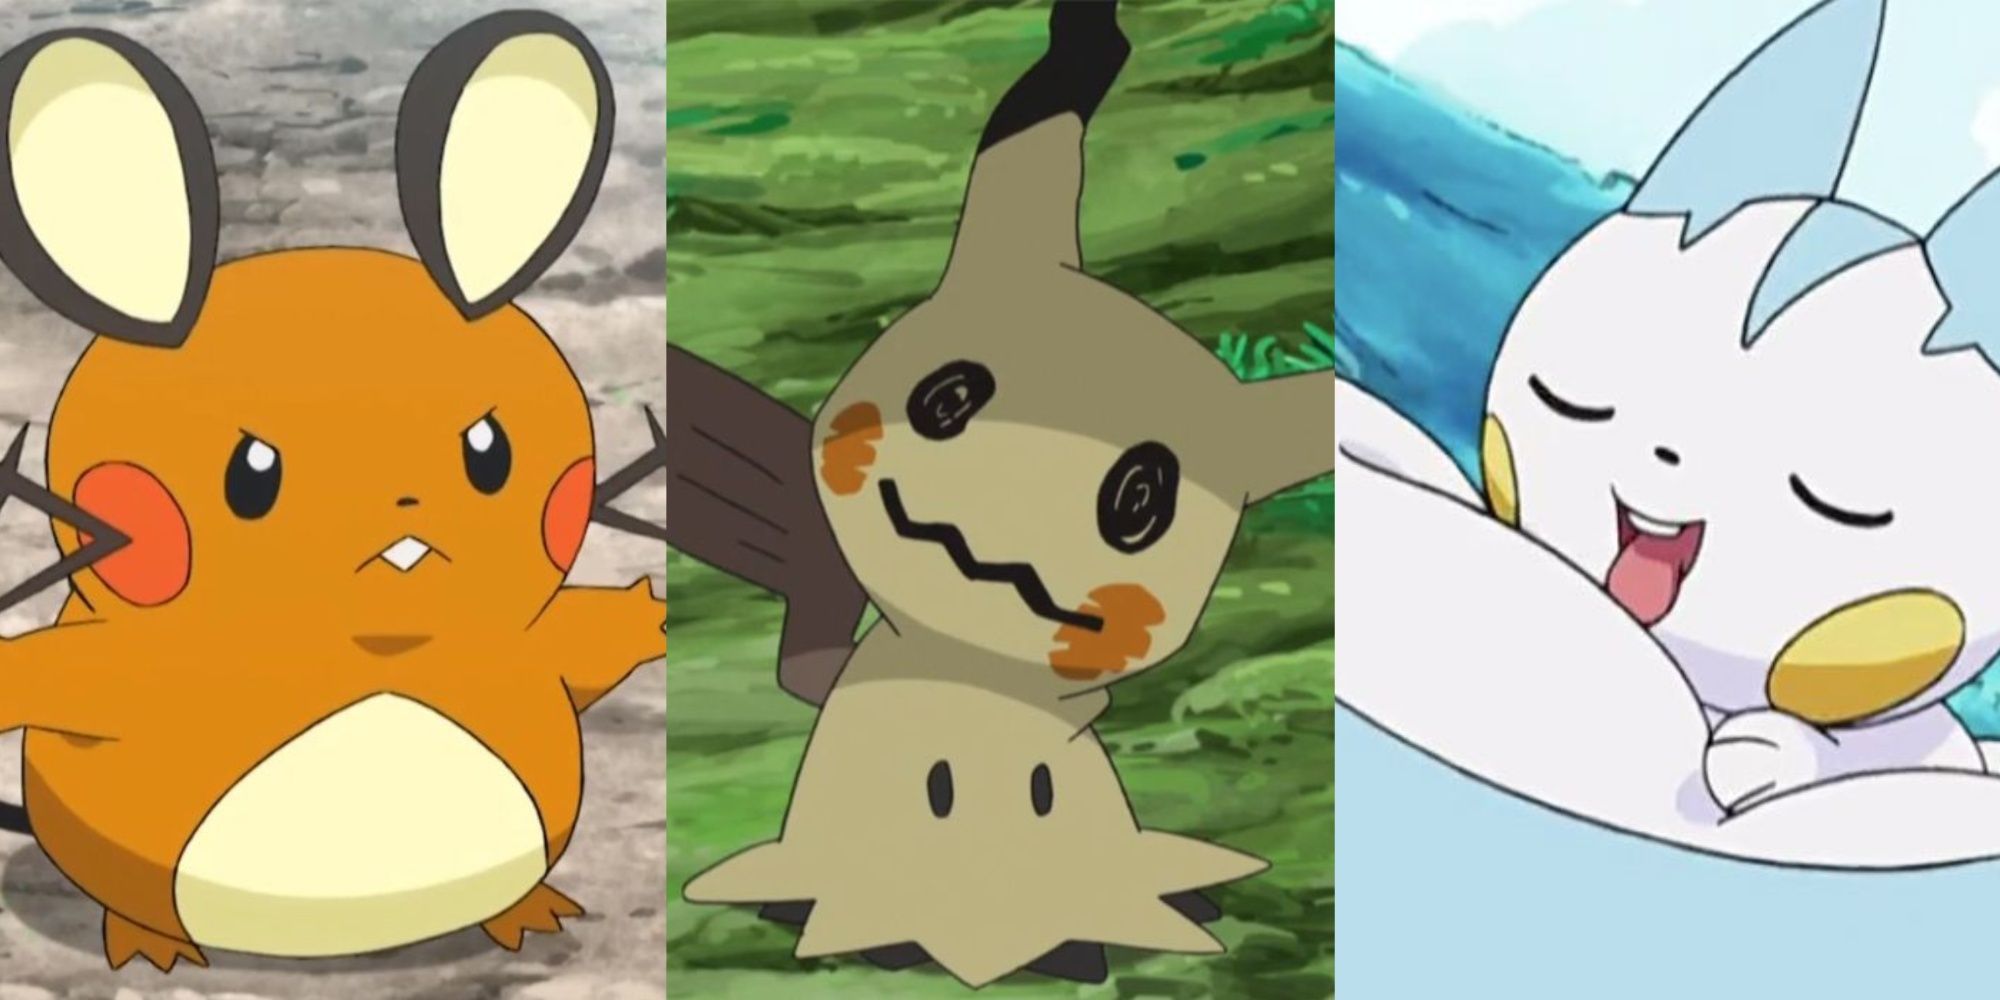 Pokémon: Every Evolution & Knockoff Of Pikachu, Ranked